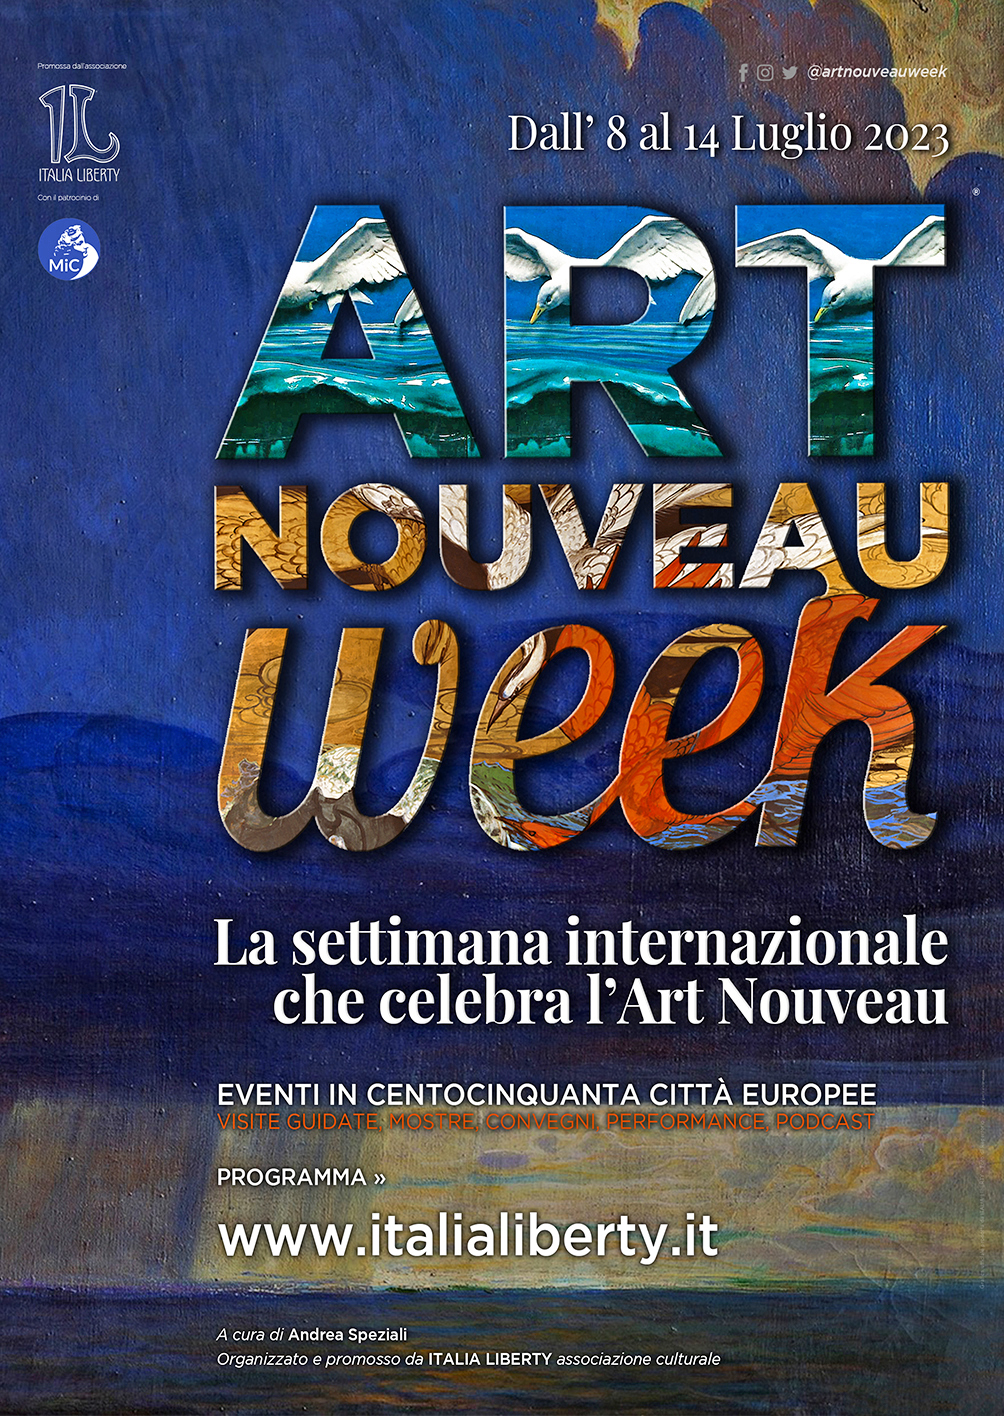 festival-europeo-art-nouveau-week